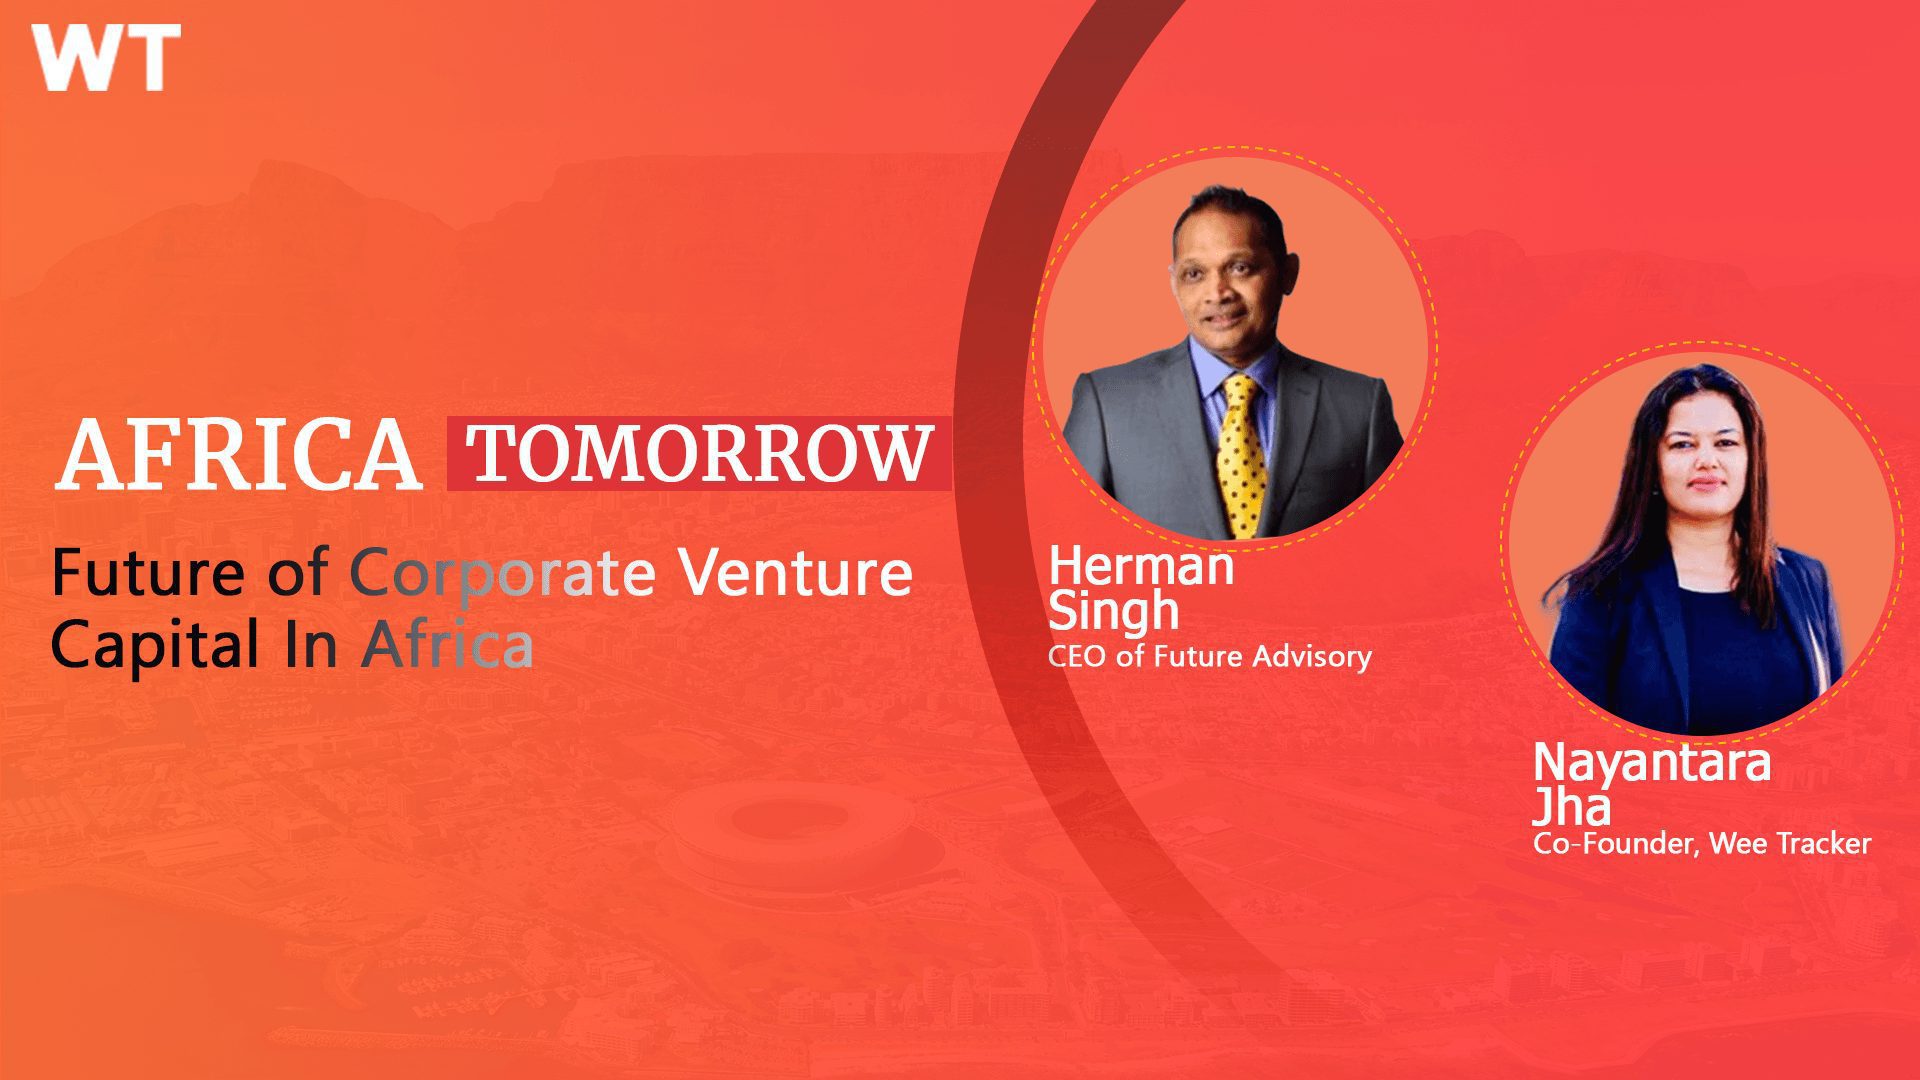 Africa Tomorrow - Corporate Venture Capital